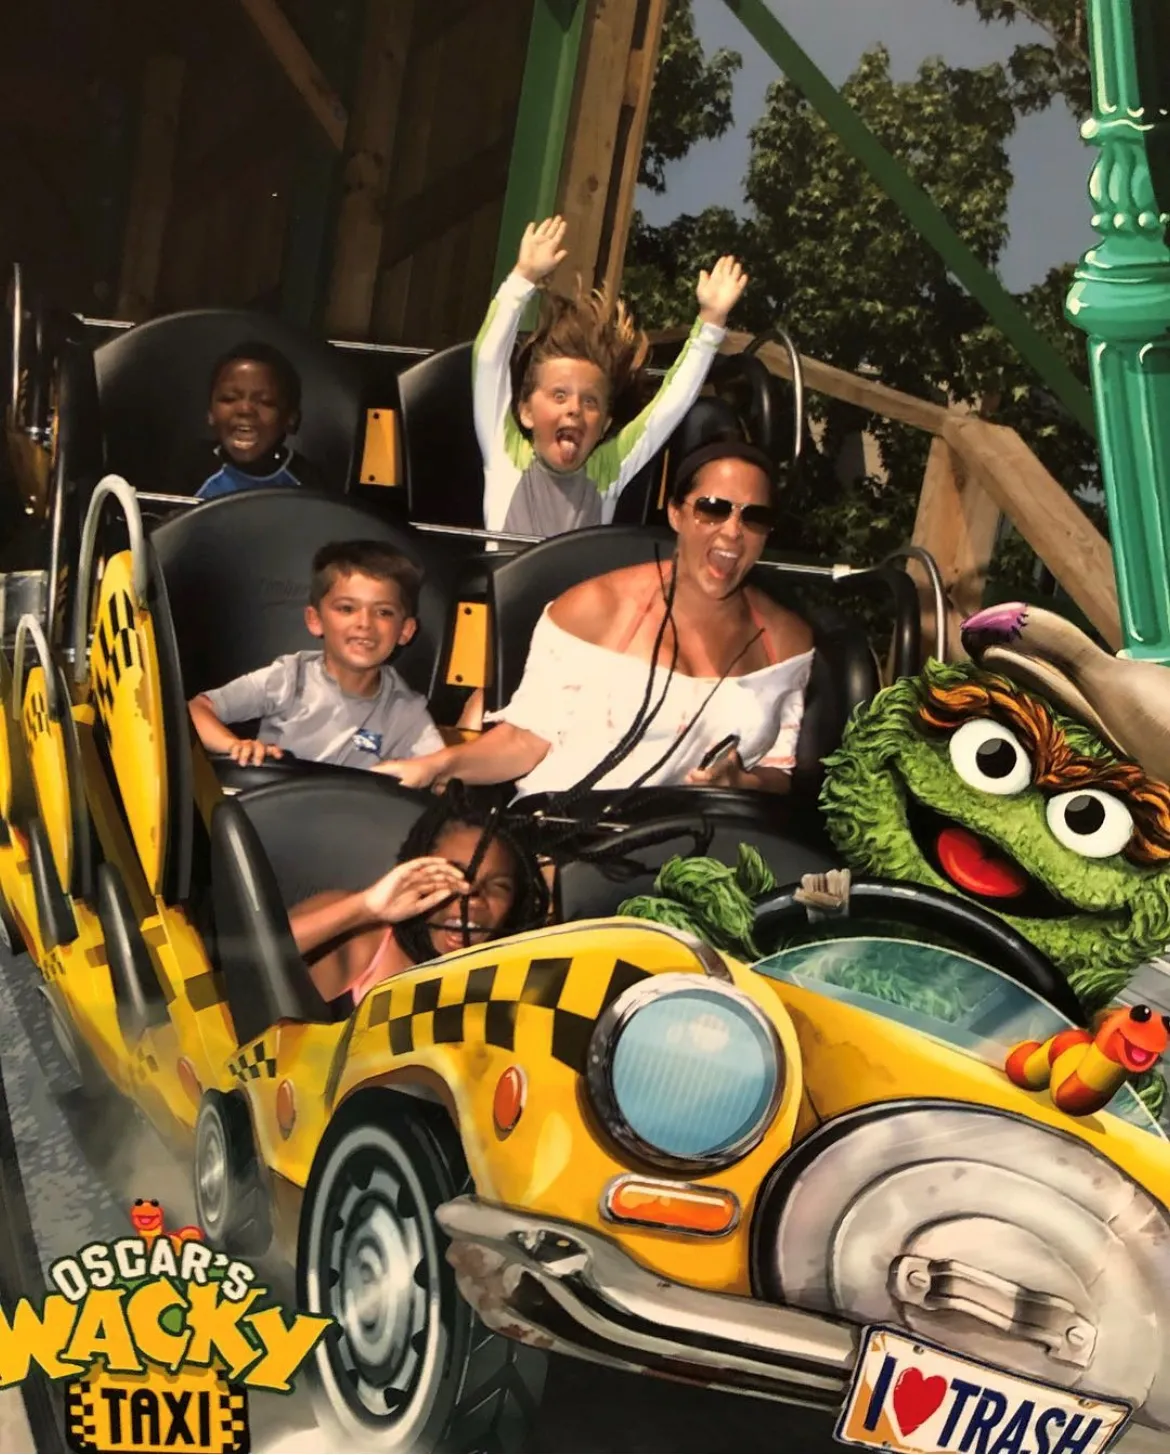 Kathy Romano on a roller coaster